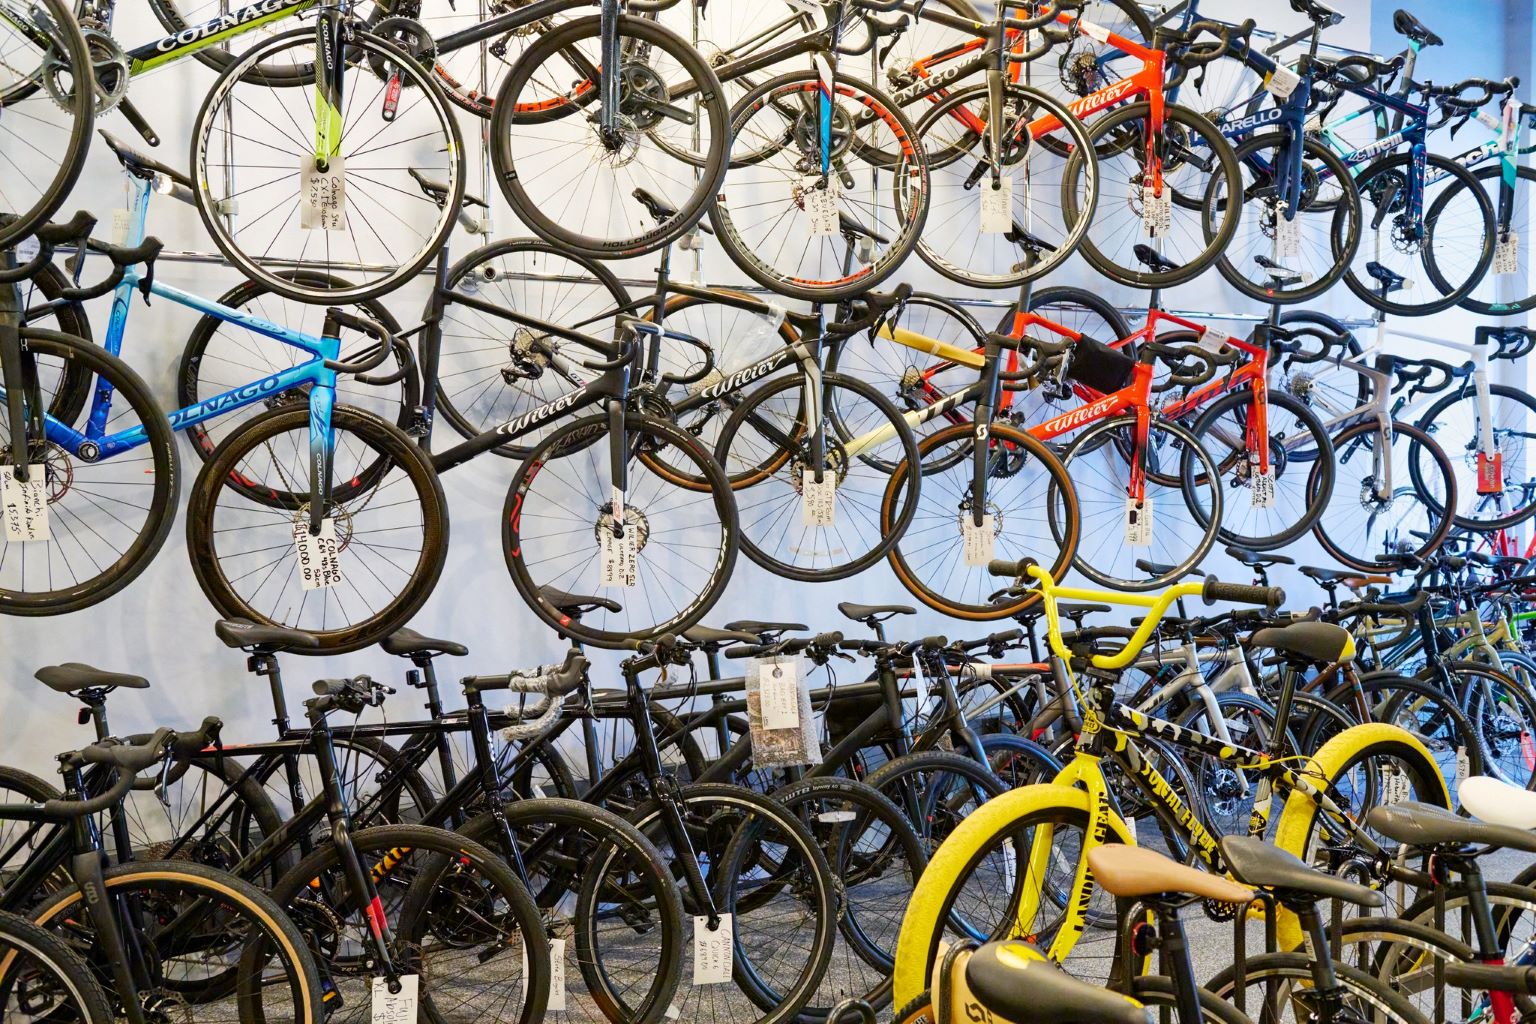 Echelon Cycles' showroom bikes